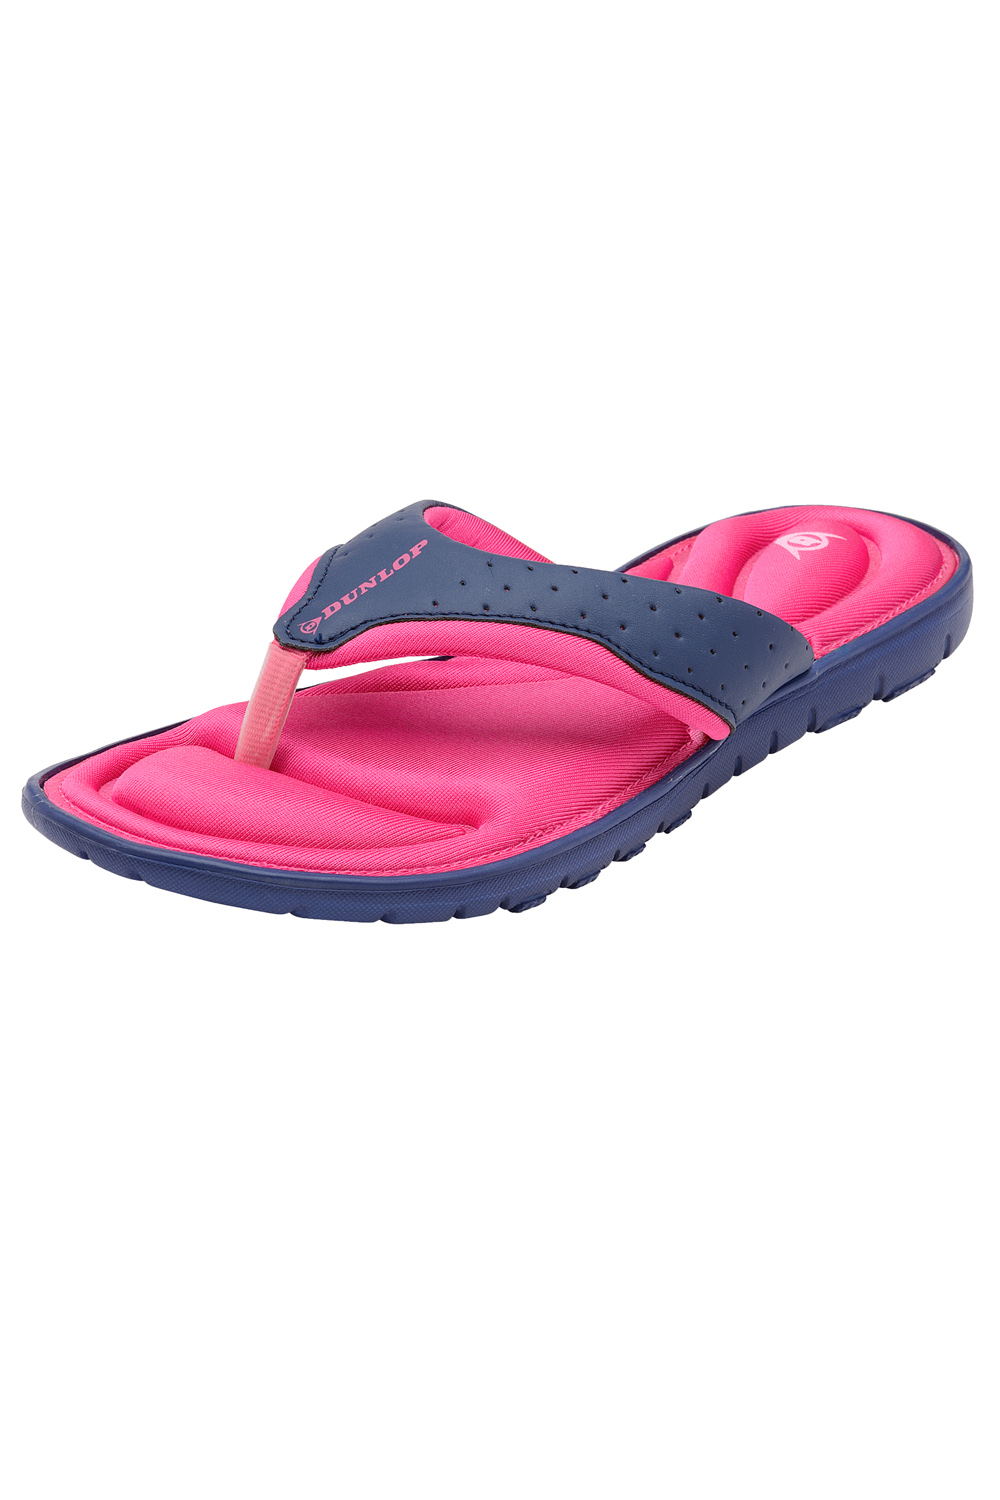 womens memory foam sandals uk